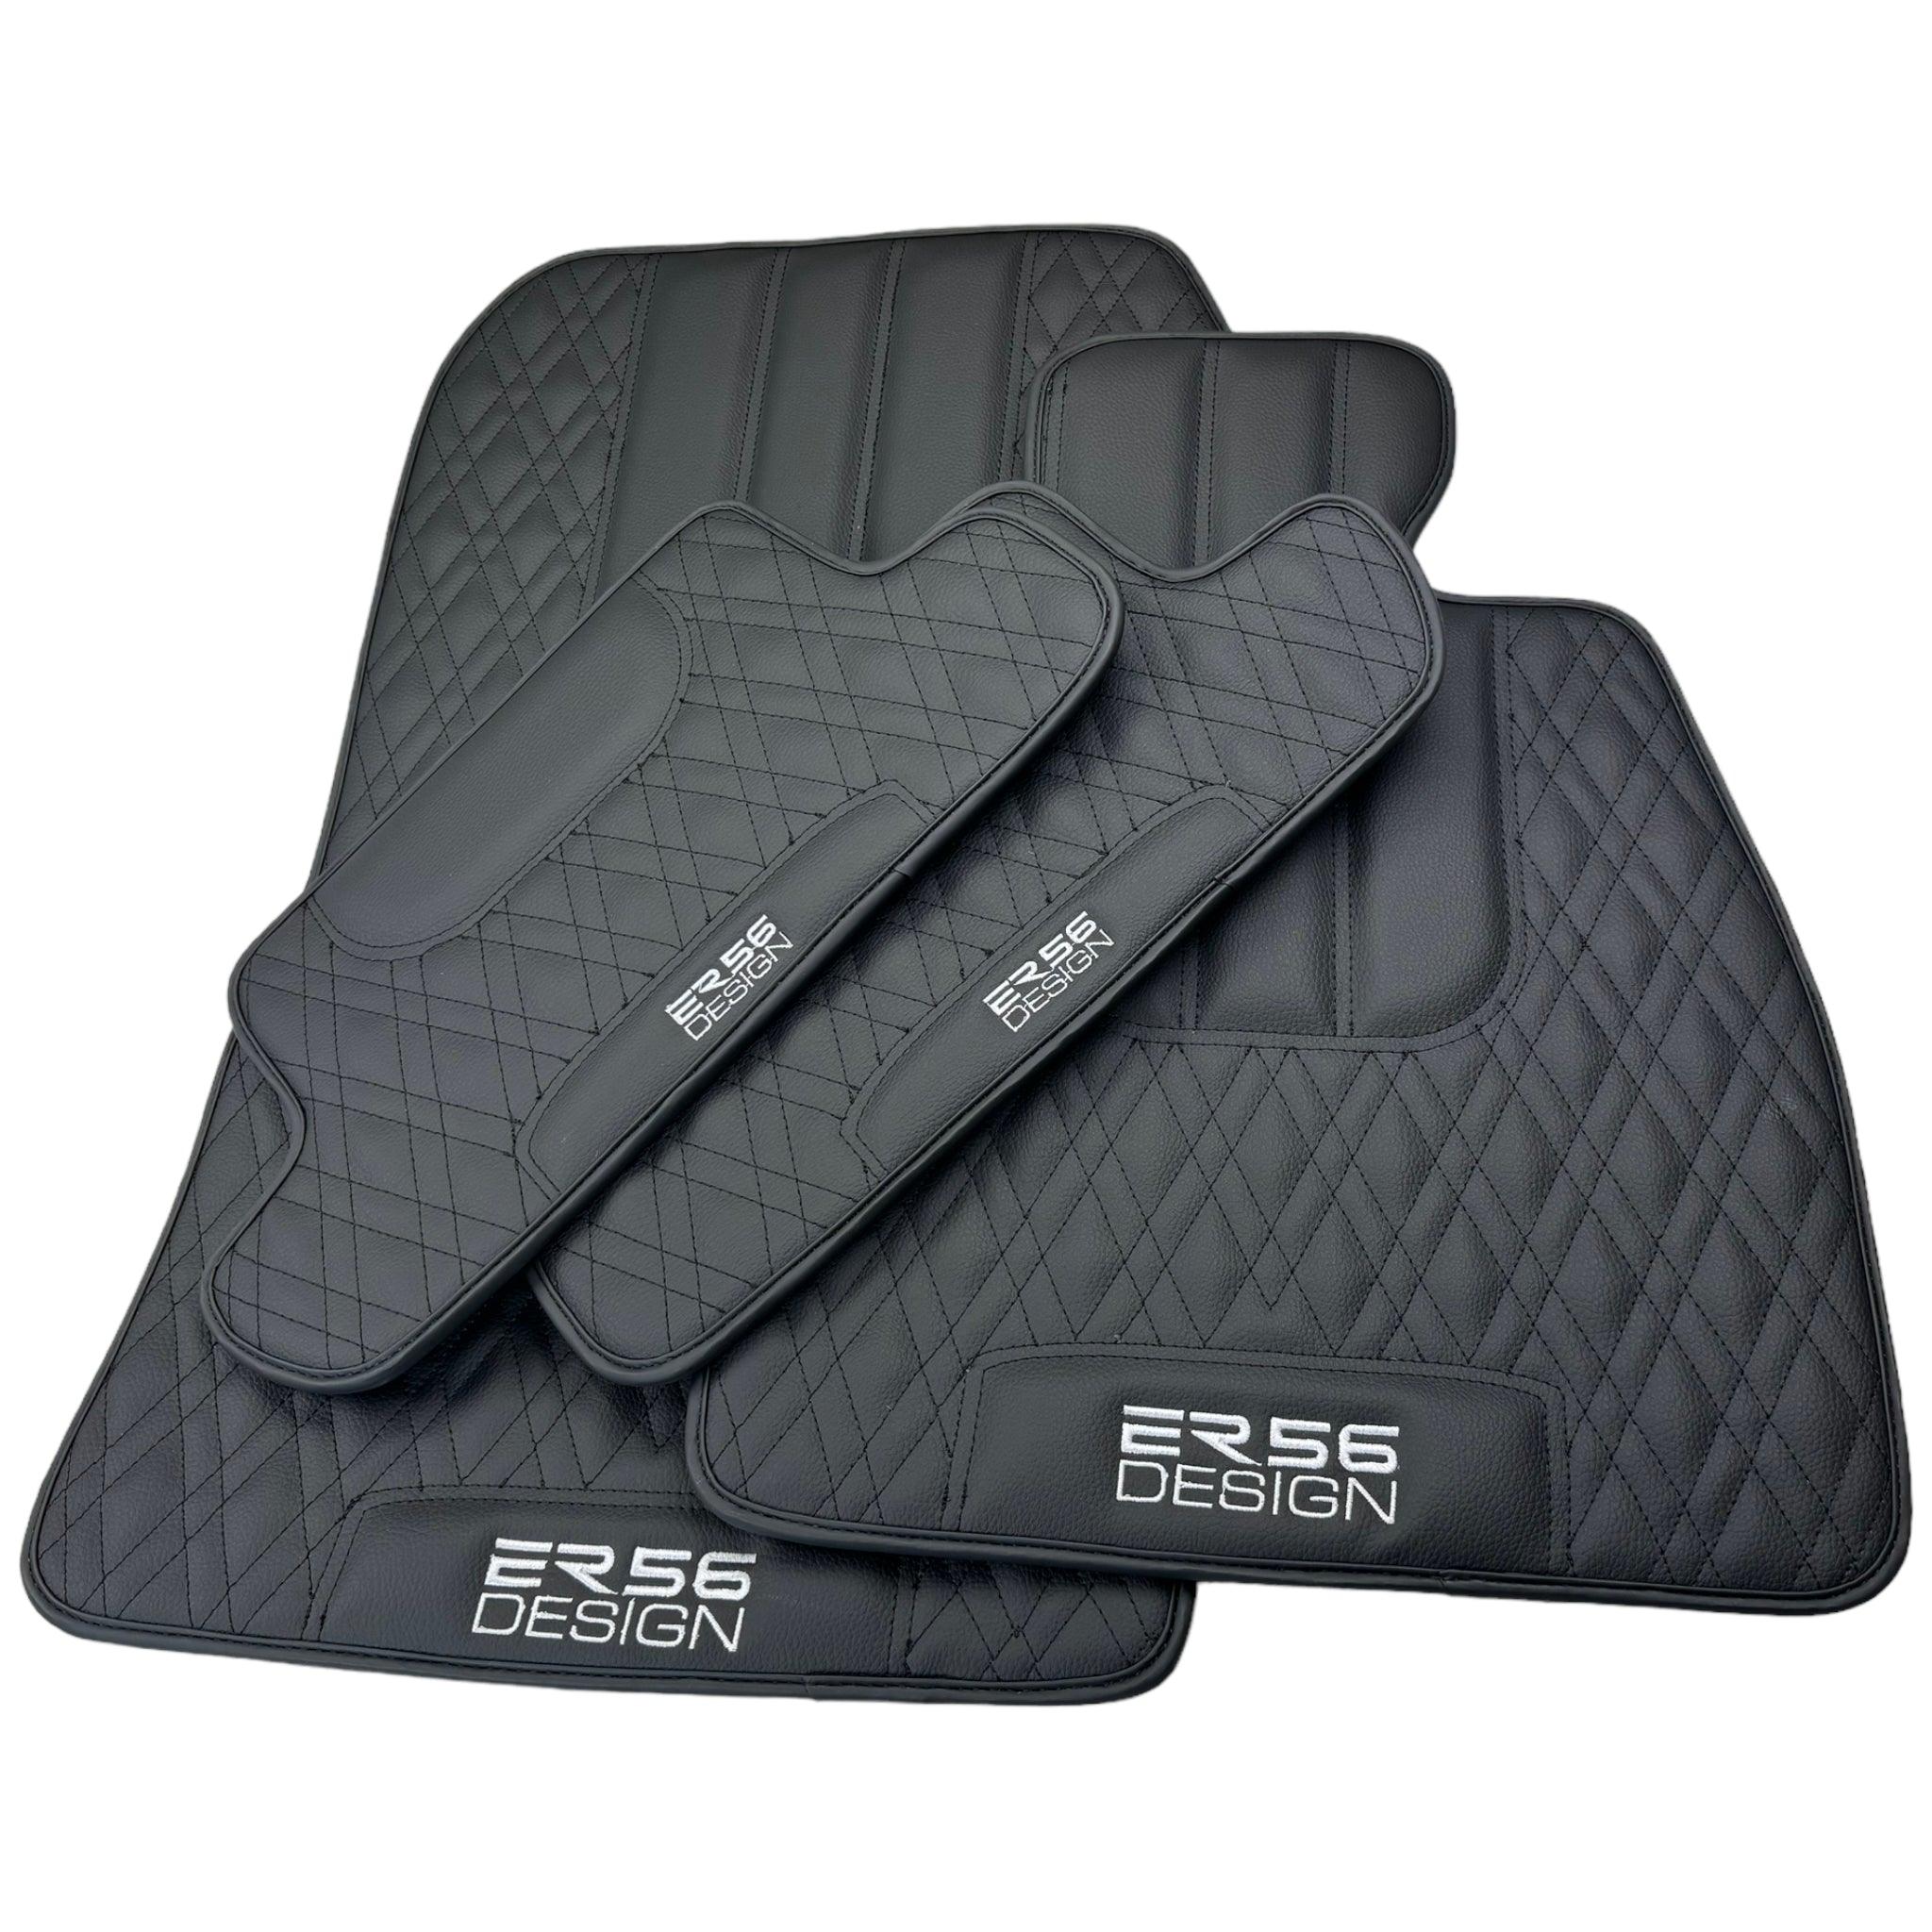 Floor Mats For BMW 8 Series G15 2-door Coupe Black Leather Er56 Design